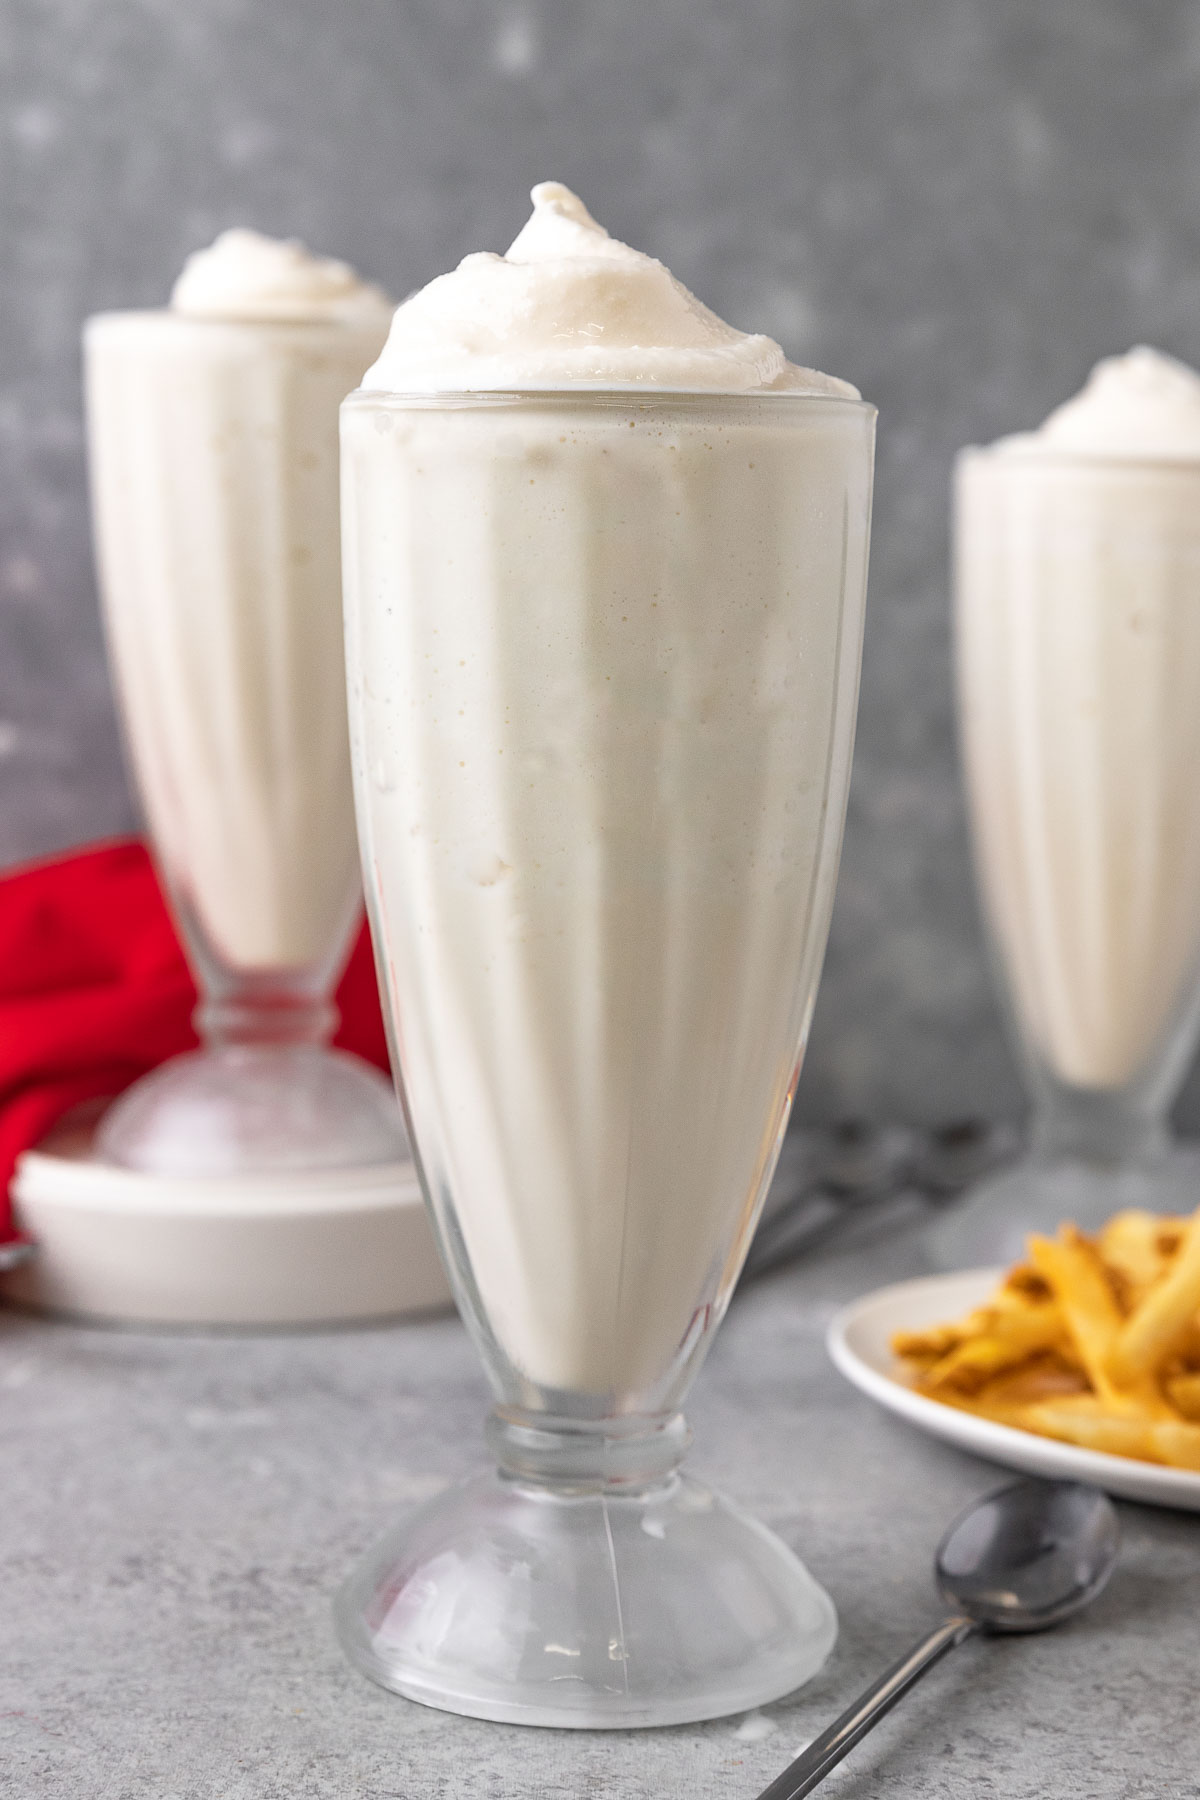 Wendys Vanilla Frosty multiple frosties in a milkshake glasses